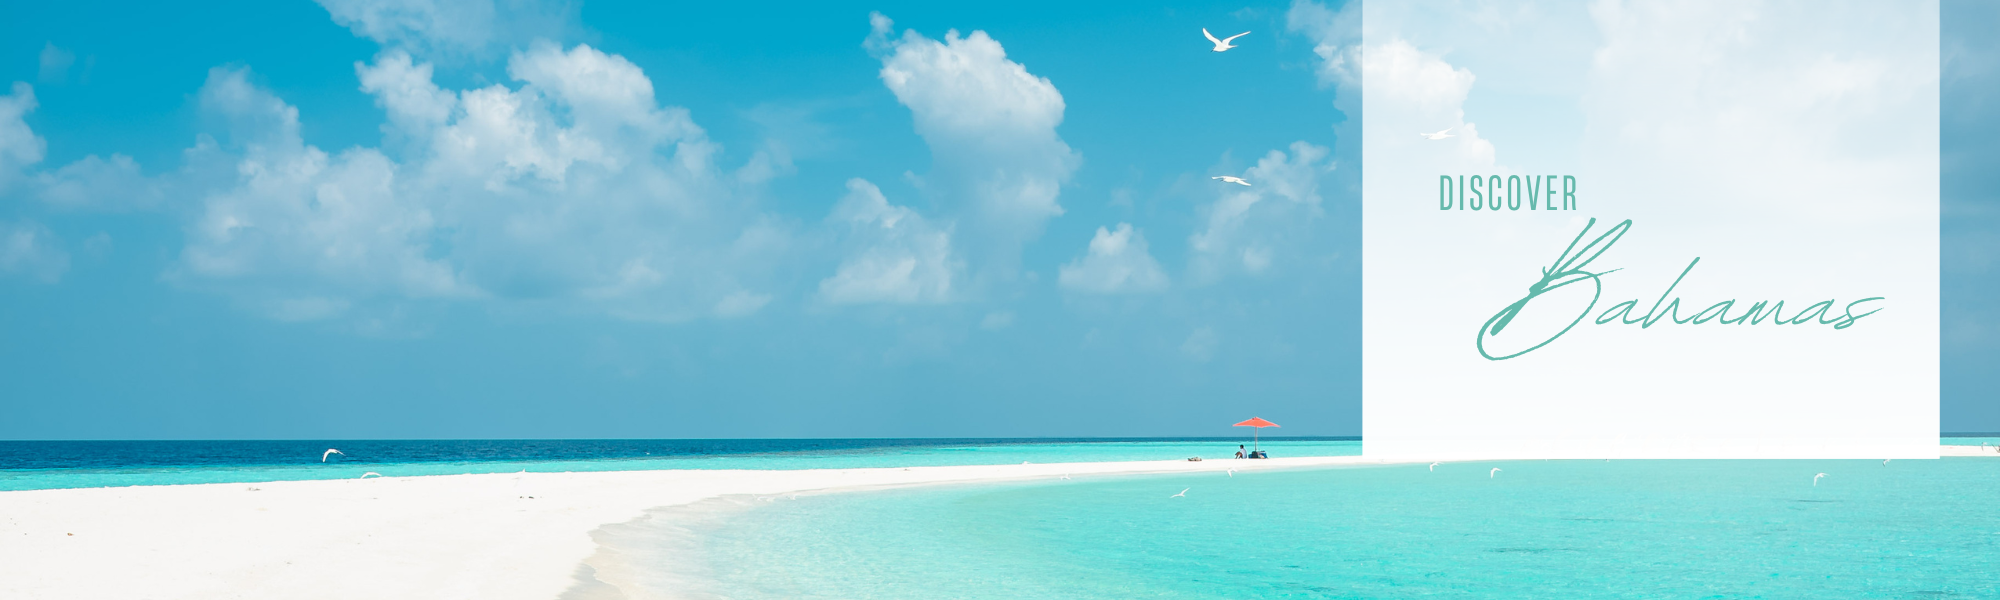 white sand beach in the bahamas